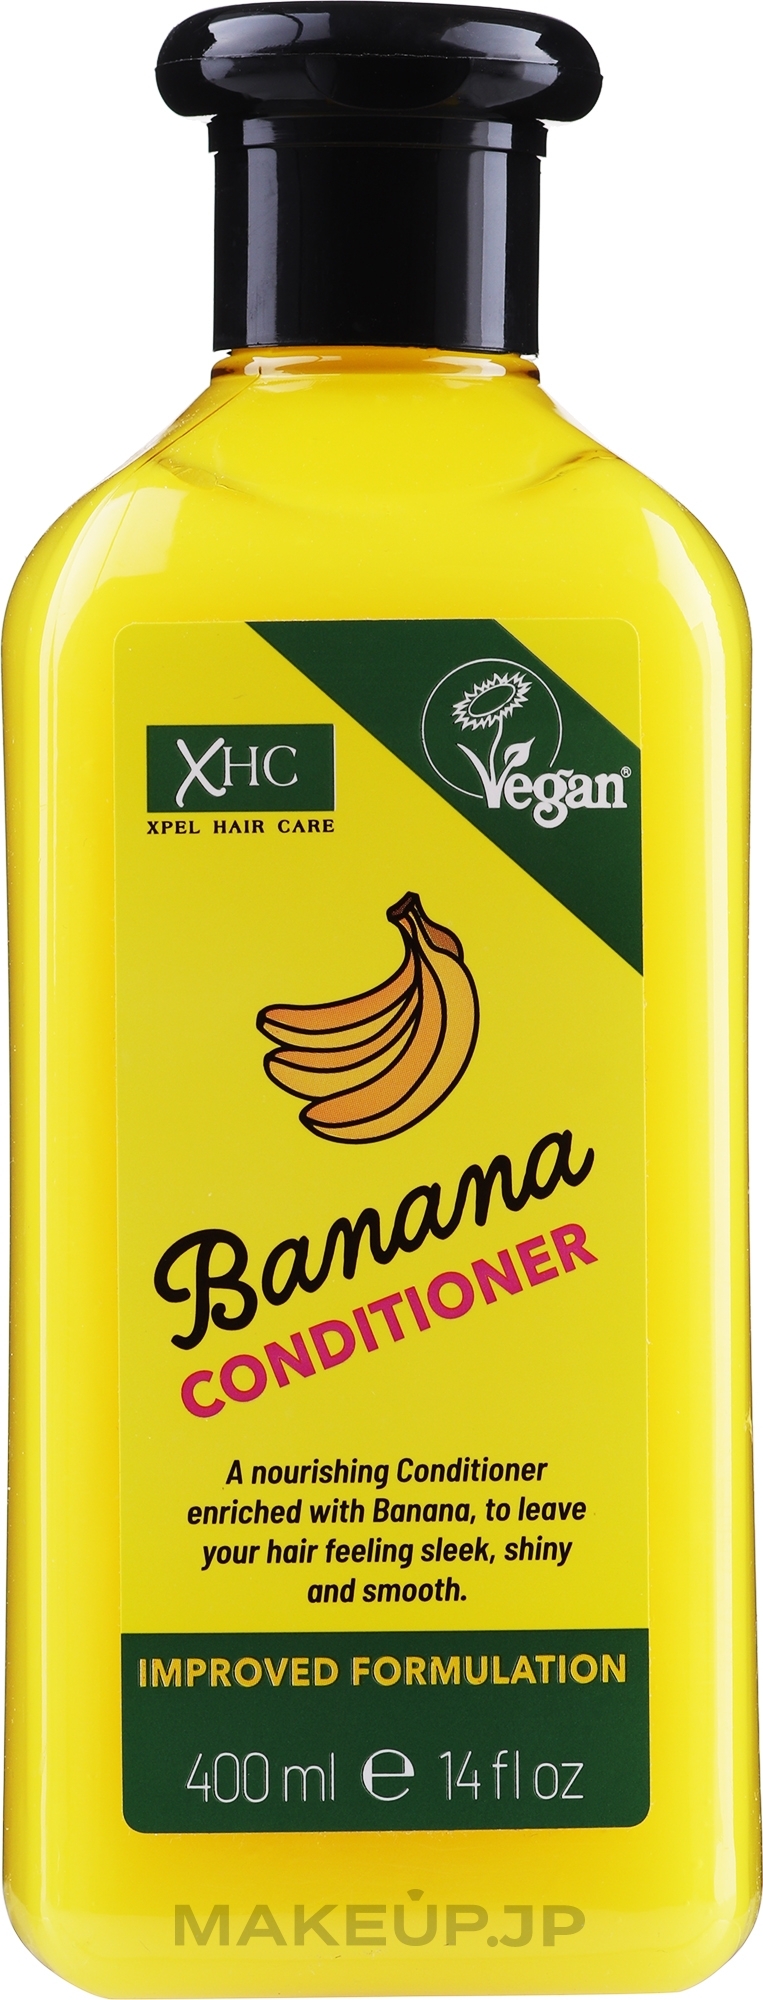 Sulfate-Free Hair Conditioner ‘Banana’ - Xpel Marketing Ltd Banana Conditioner — photo 400 ml